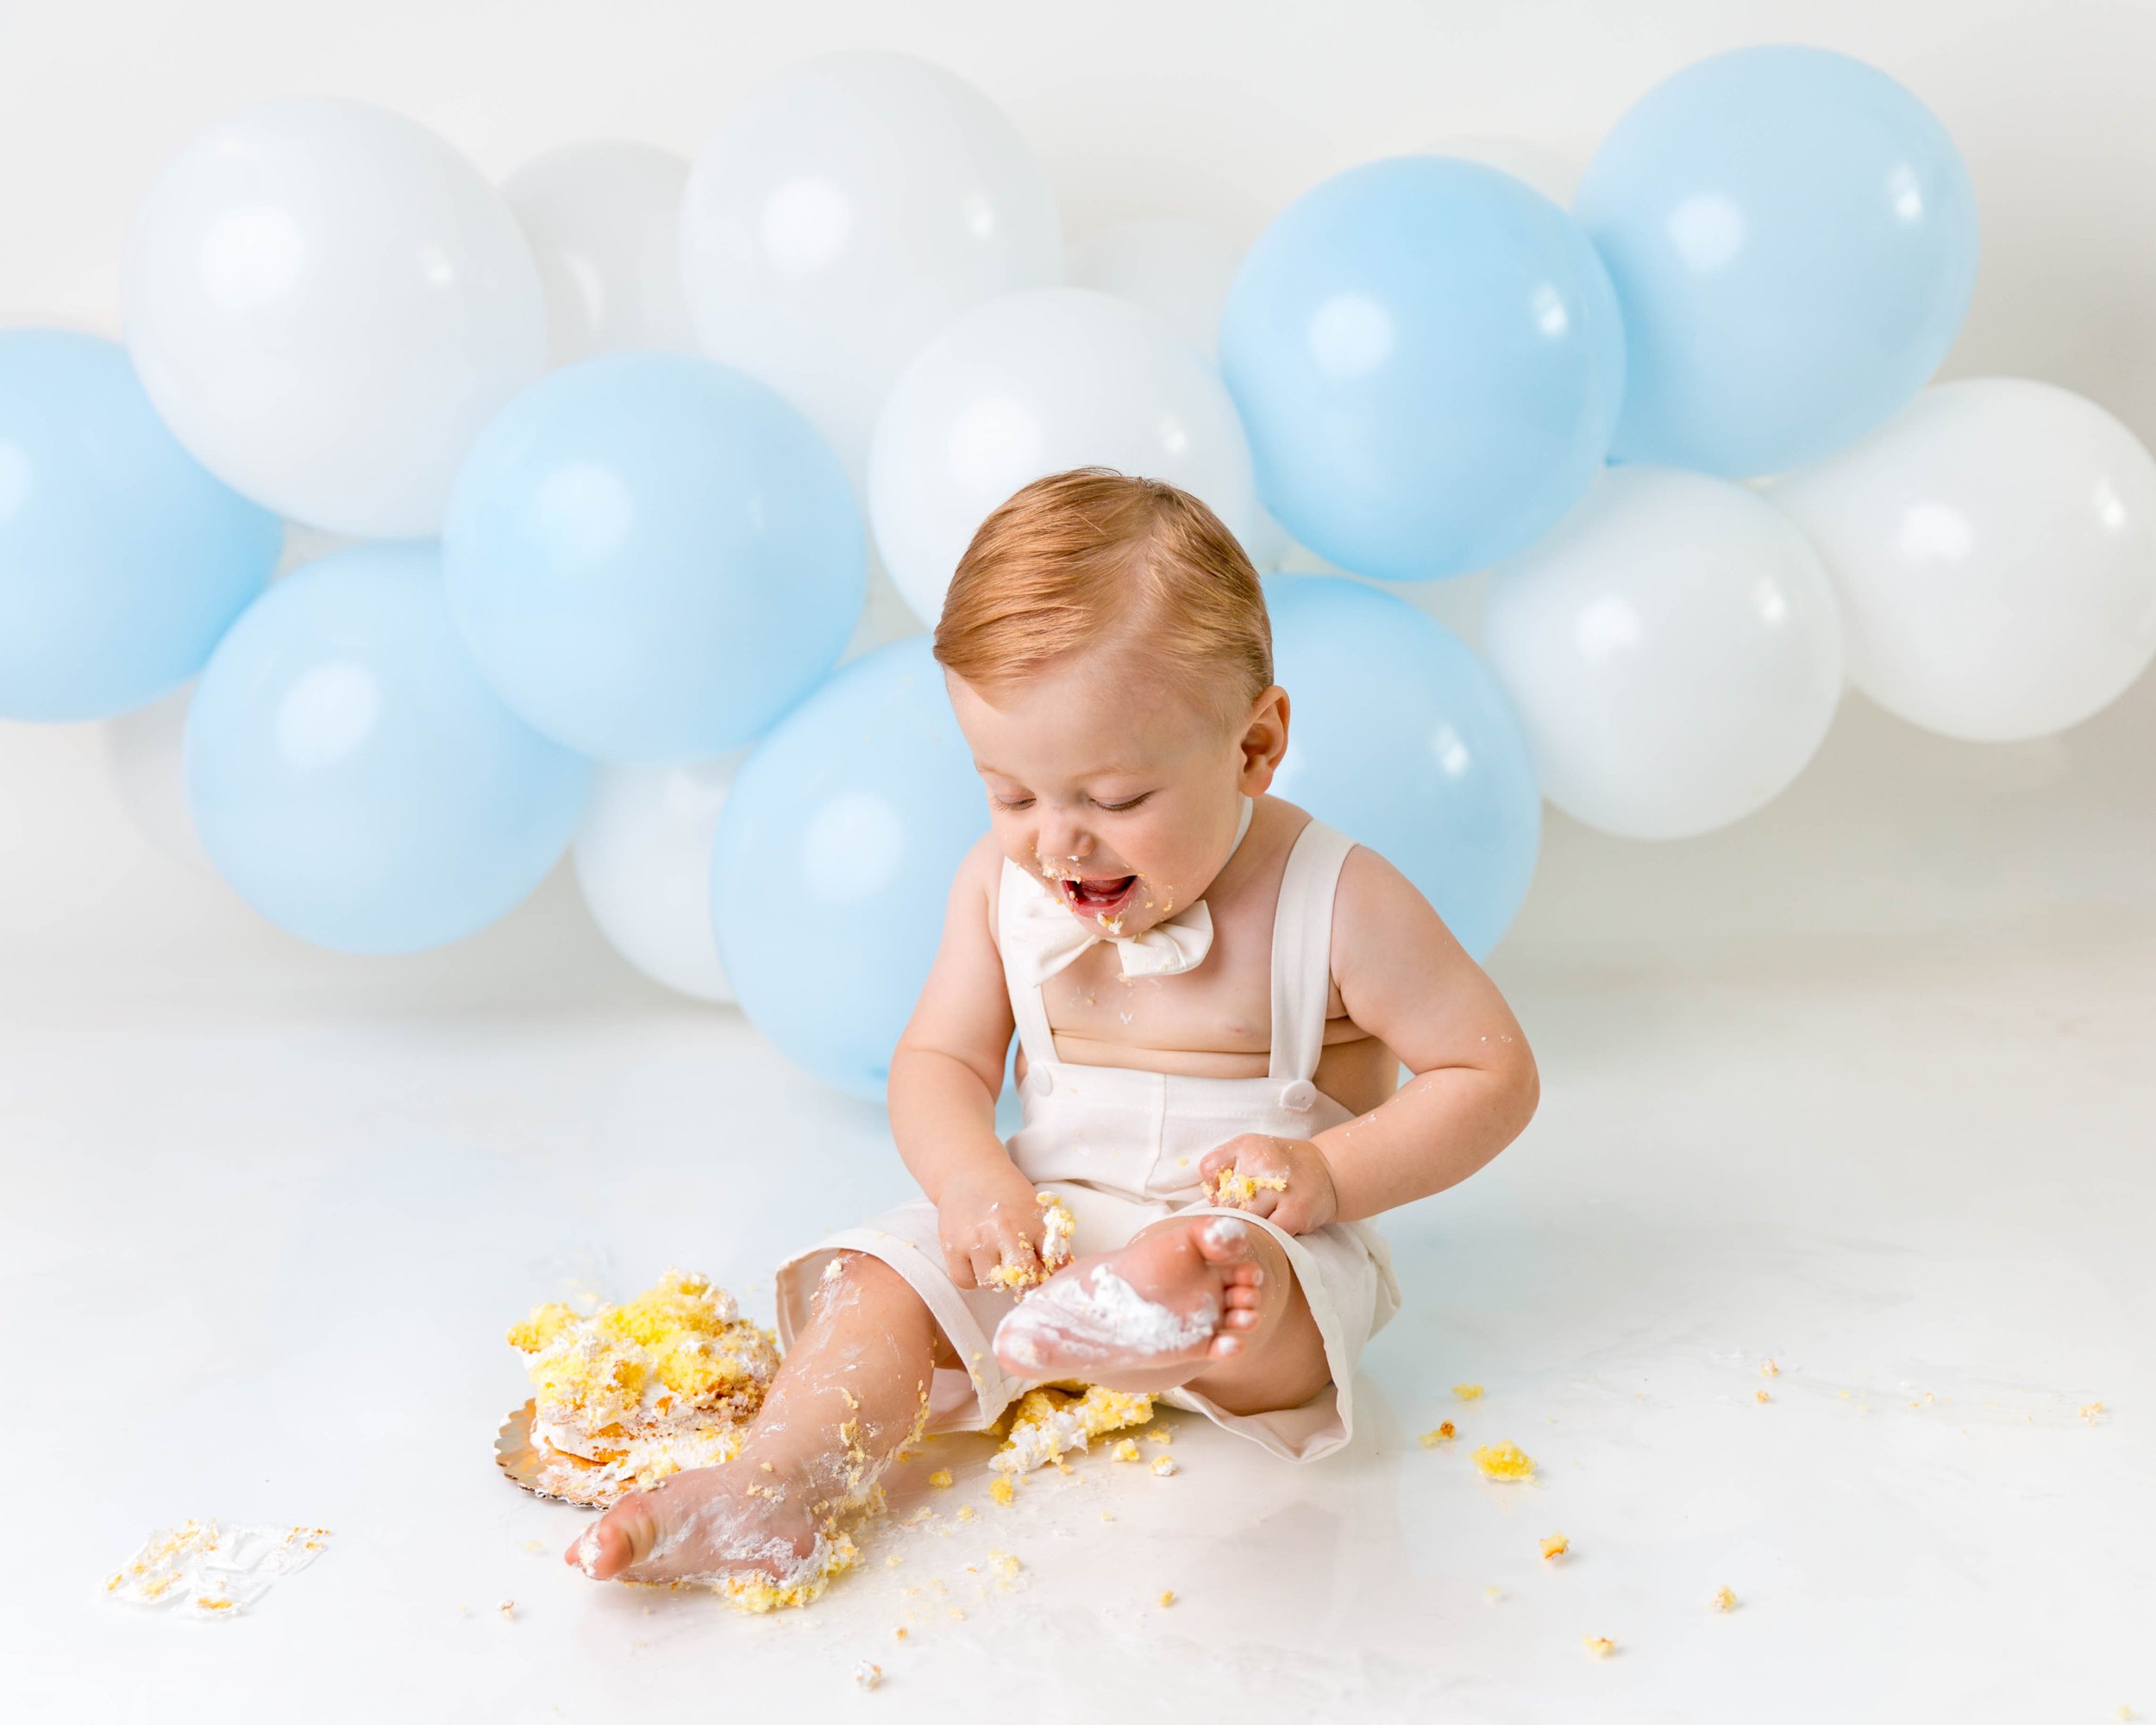 cake-smash-photos-first-birthday-images-milestone-photography-newborn-family-spokane-washington-9.jpg